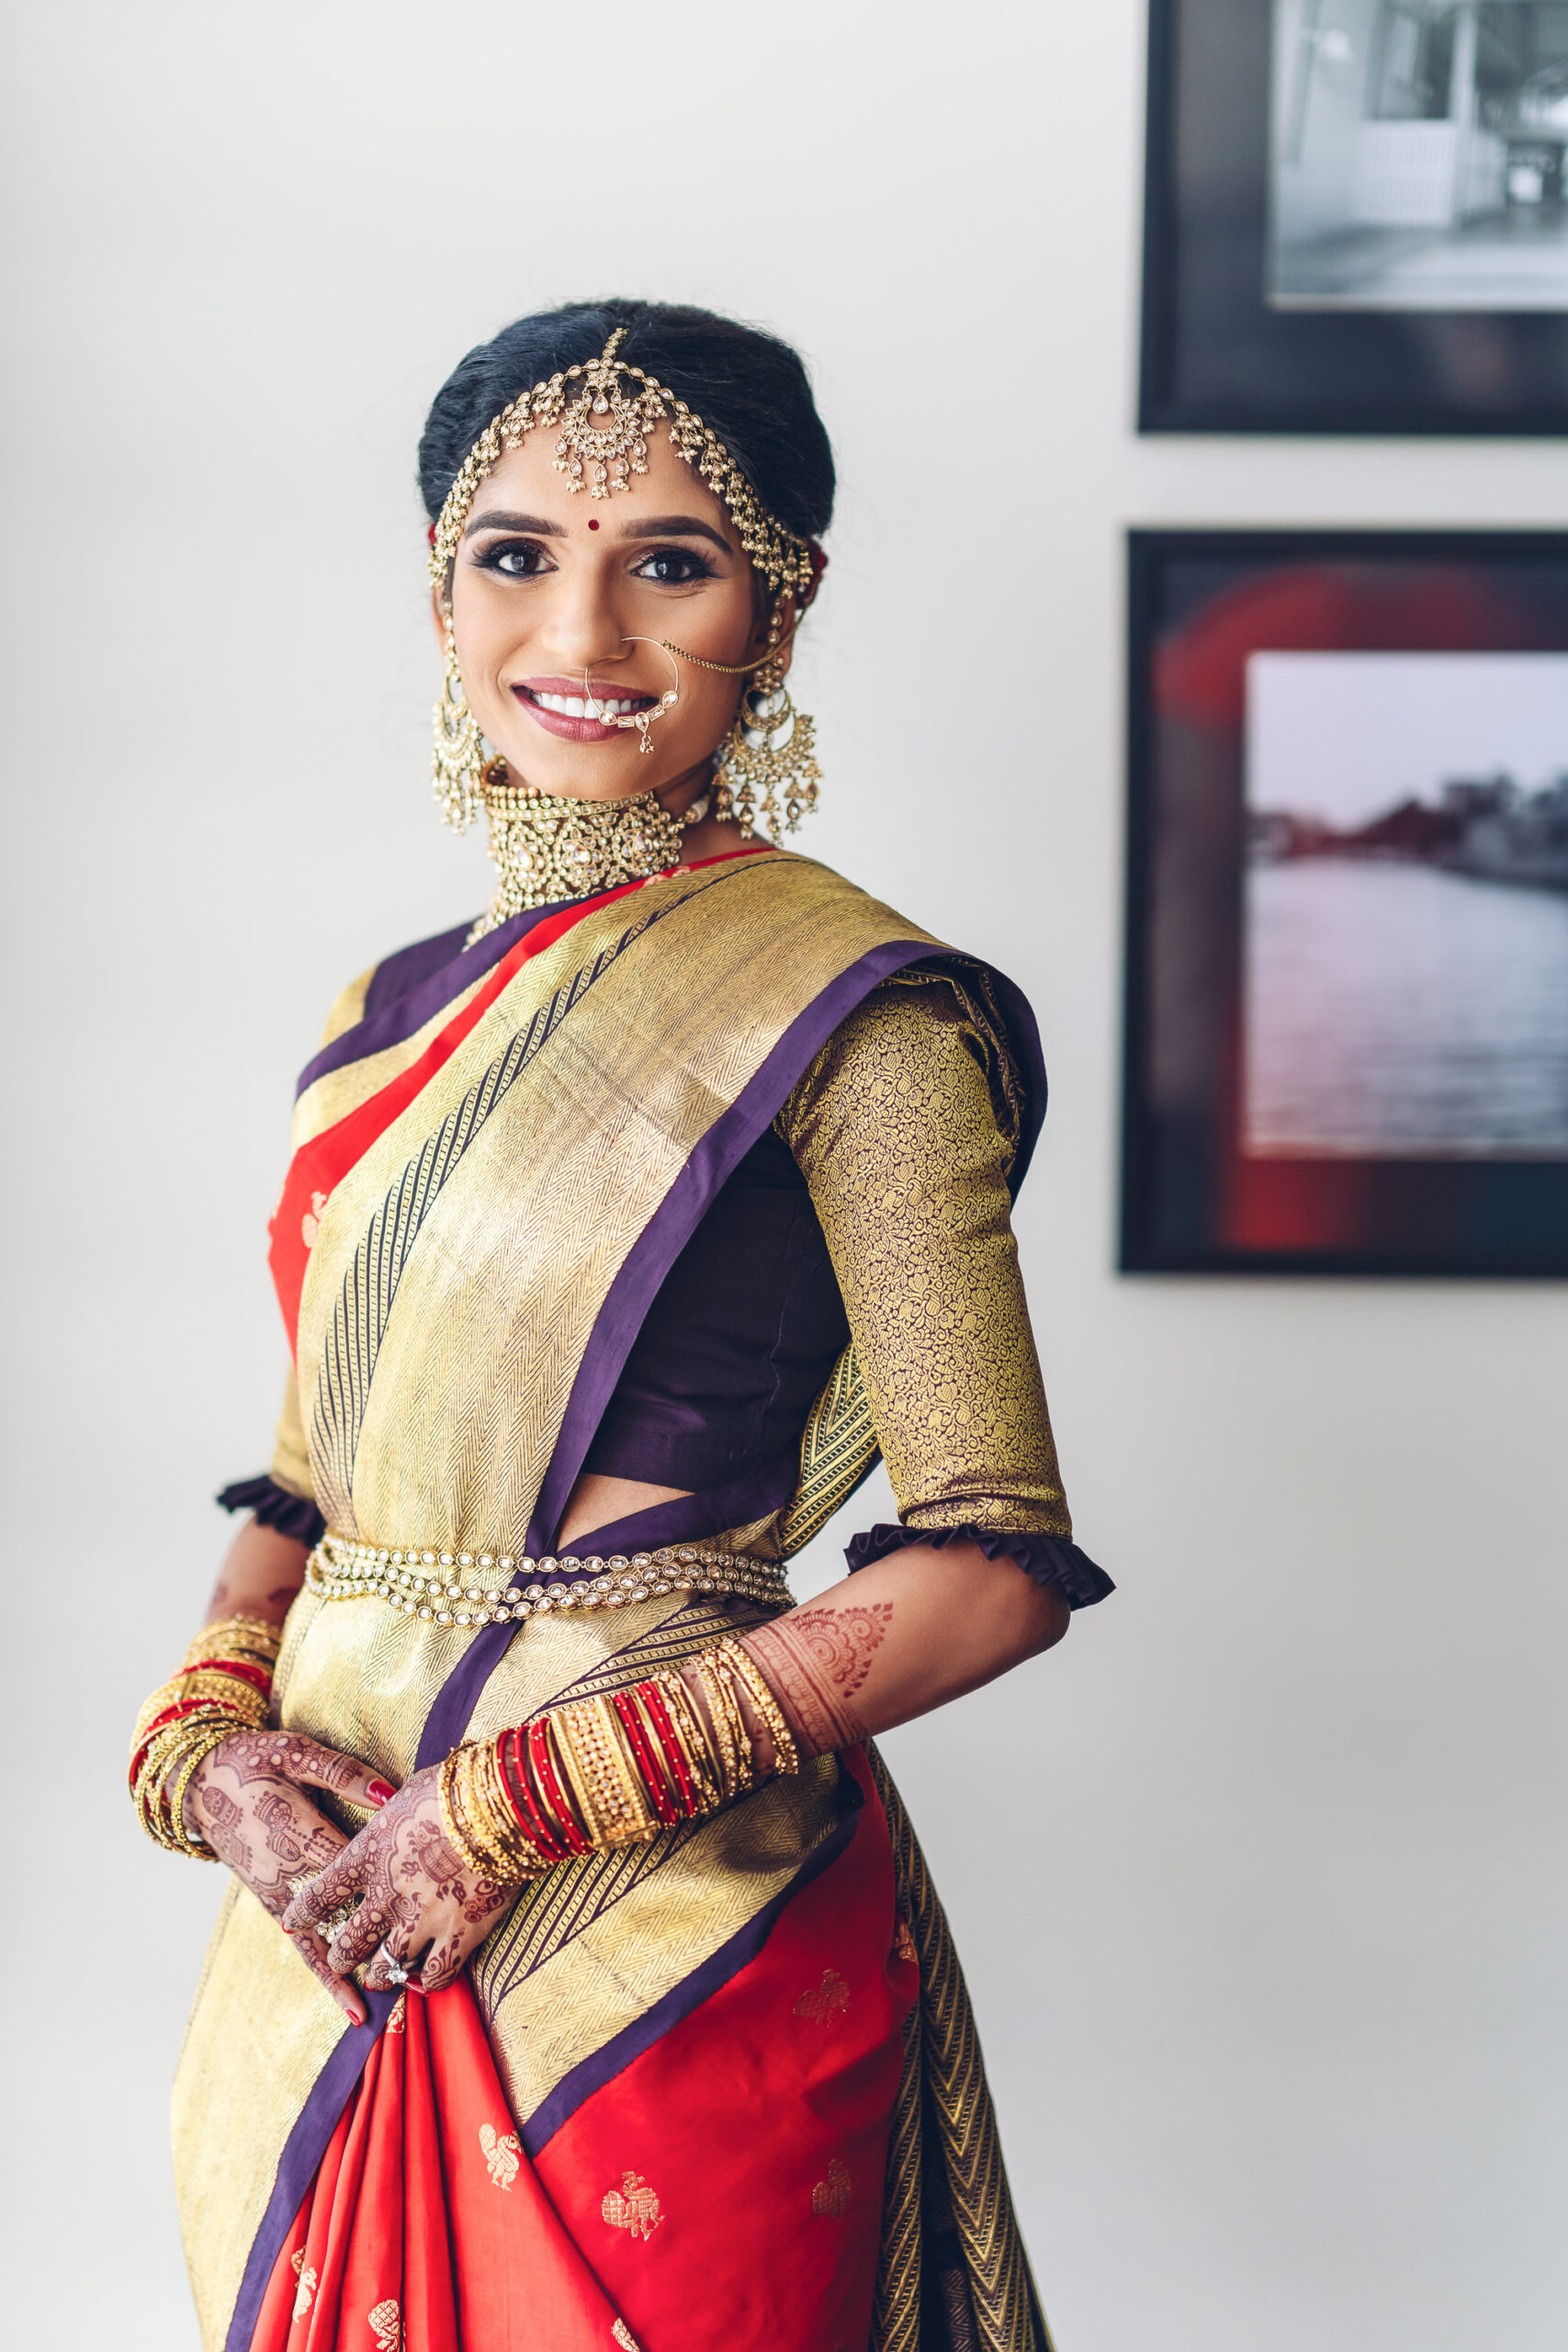 Chaitanya Sameer Modern Indian Wedding Splendid Photos Video 003 scaled